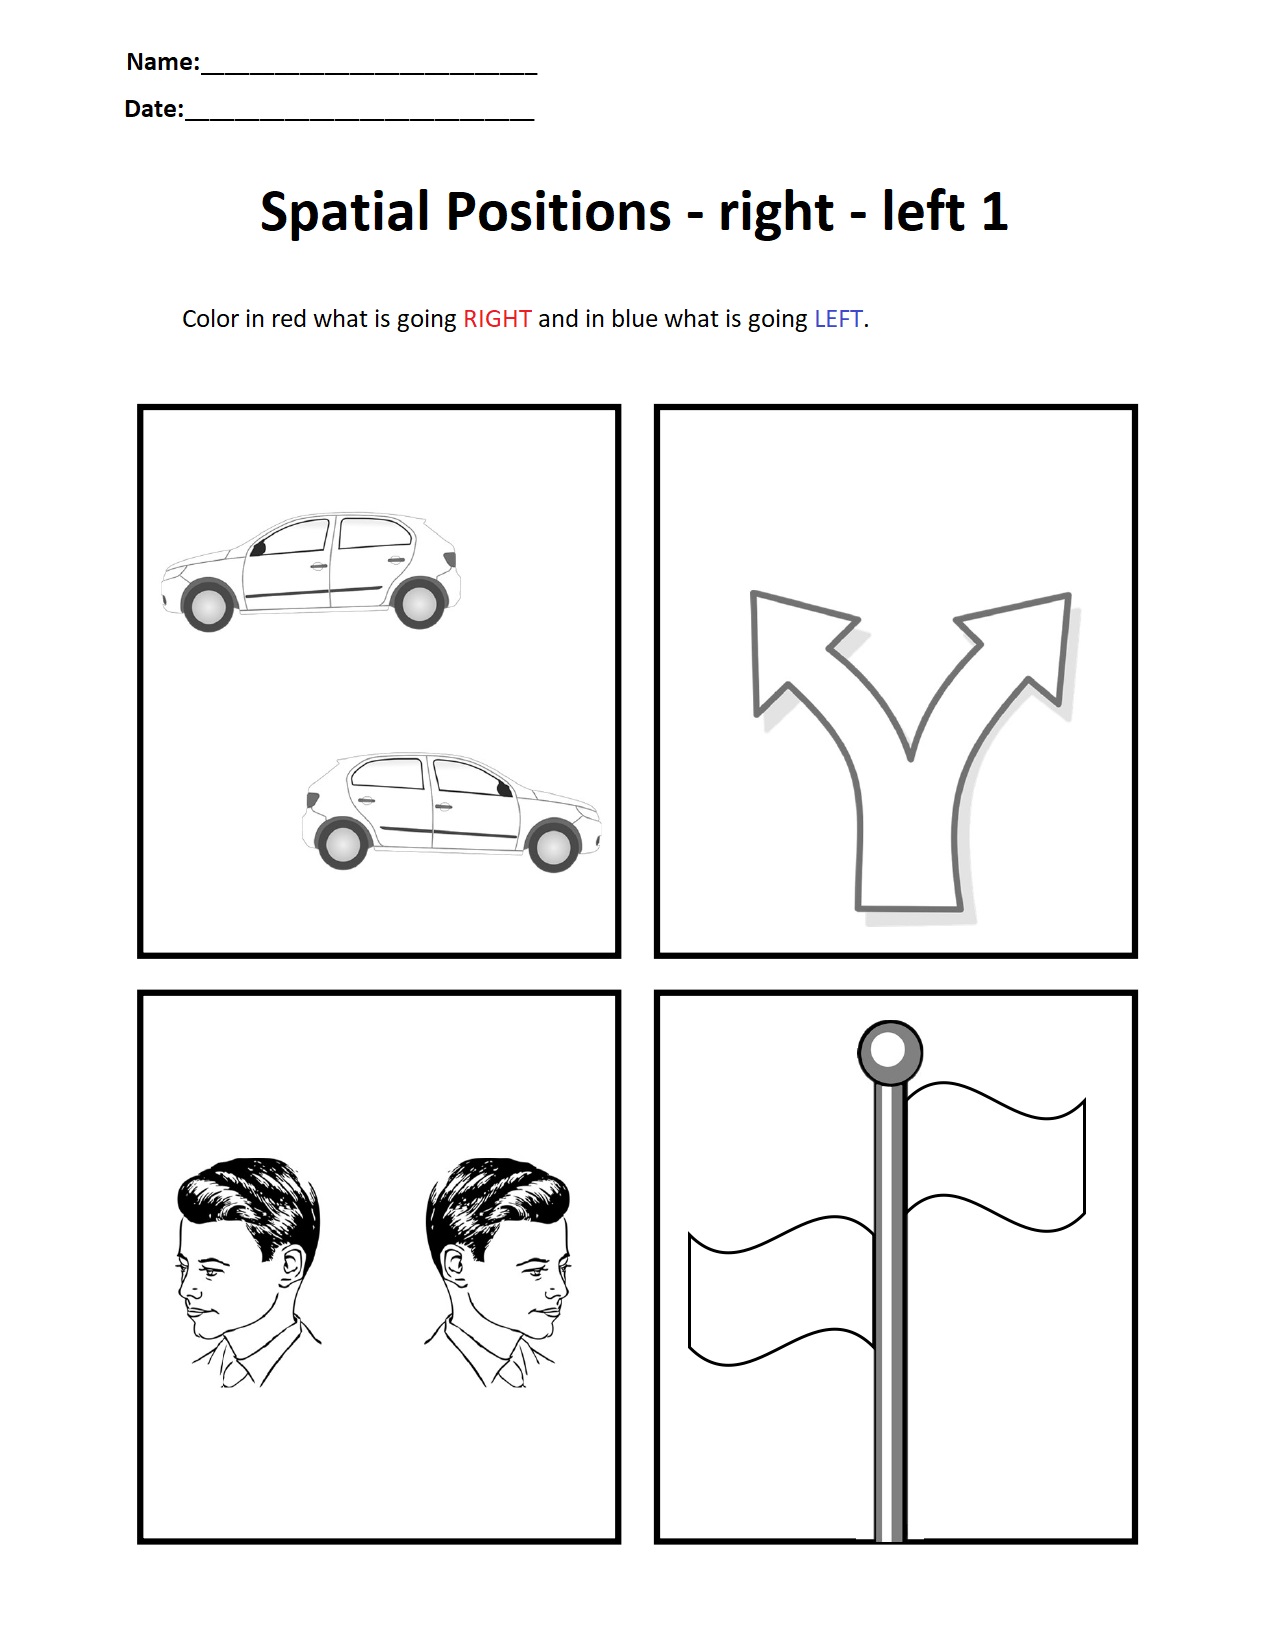 Spatial Positions - right - left 3.jpg